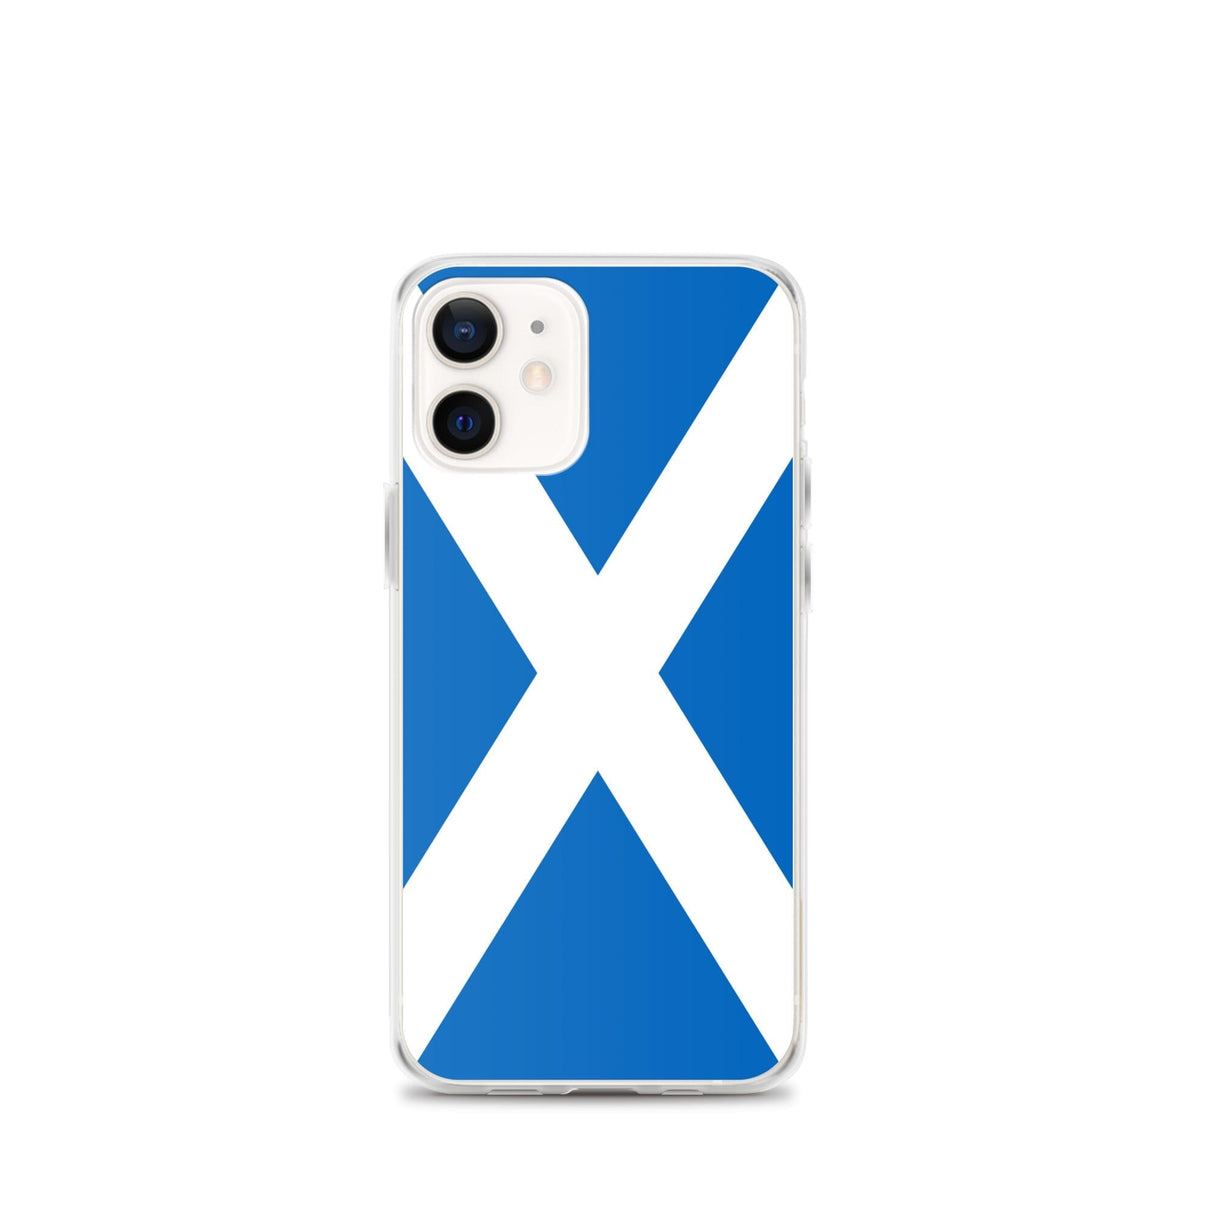 Flag of Scotland iPhone Case - Pixelforma